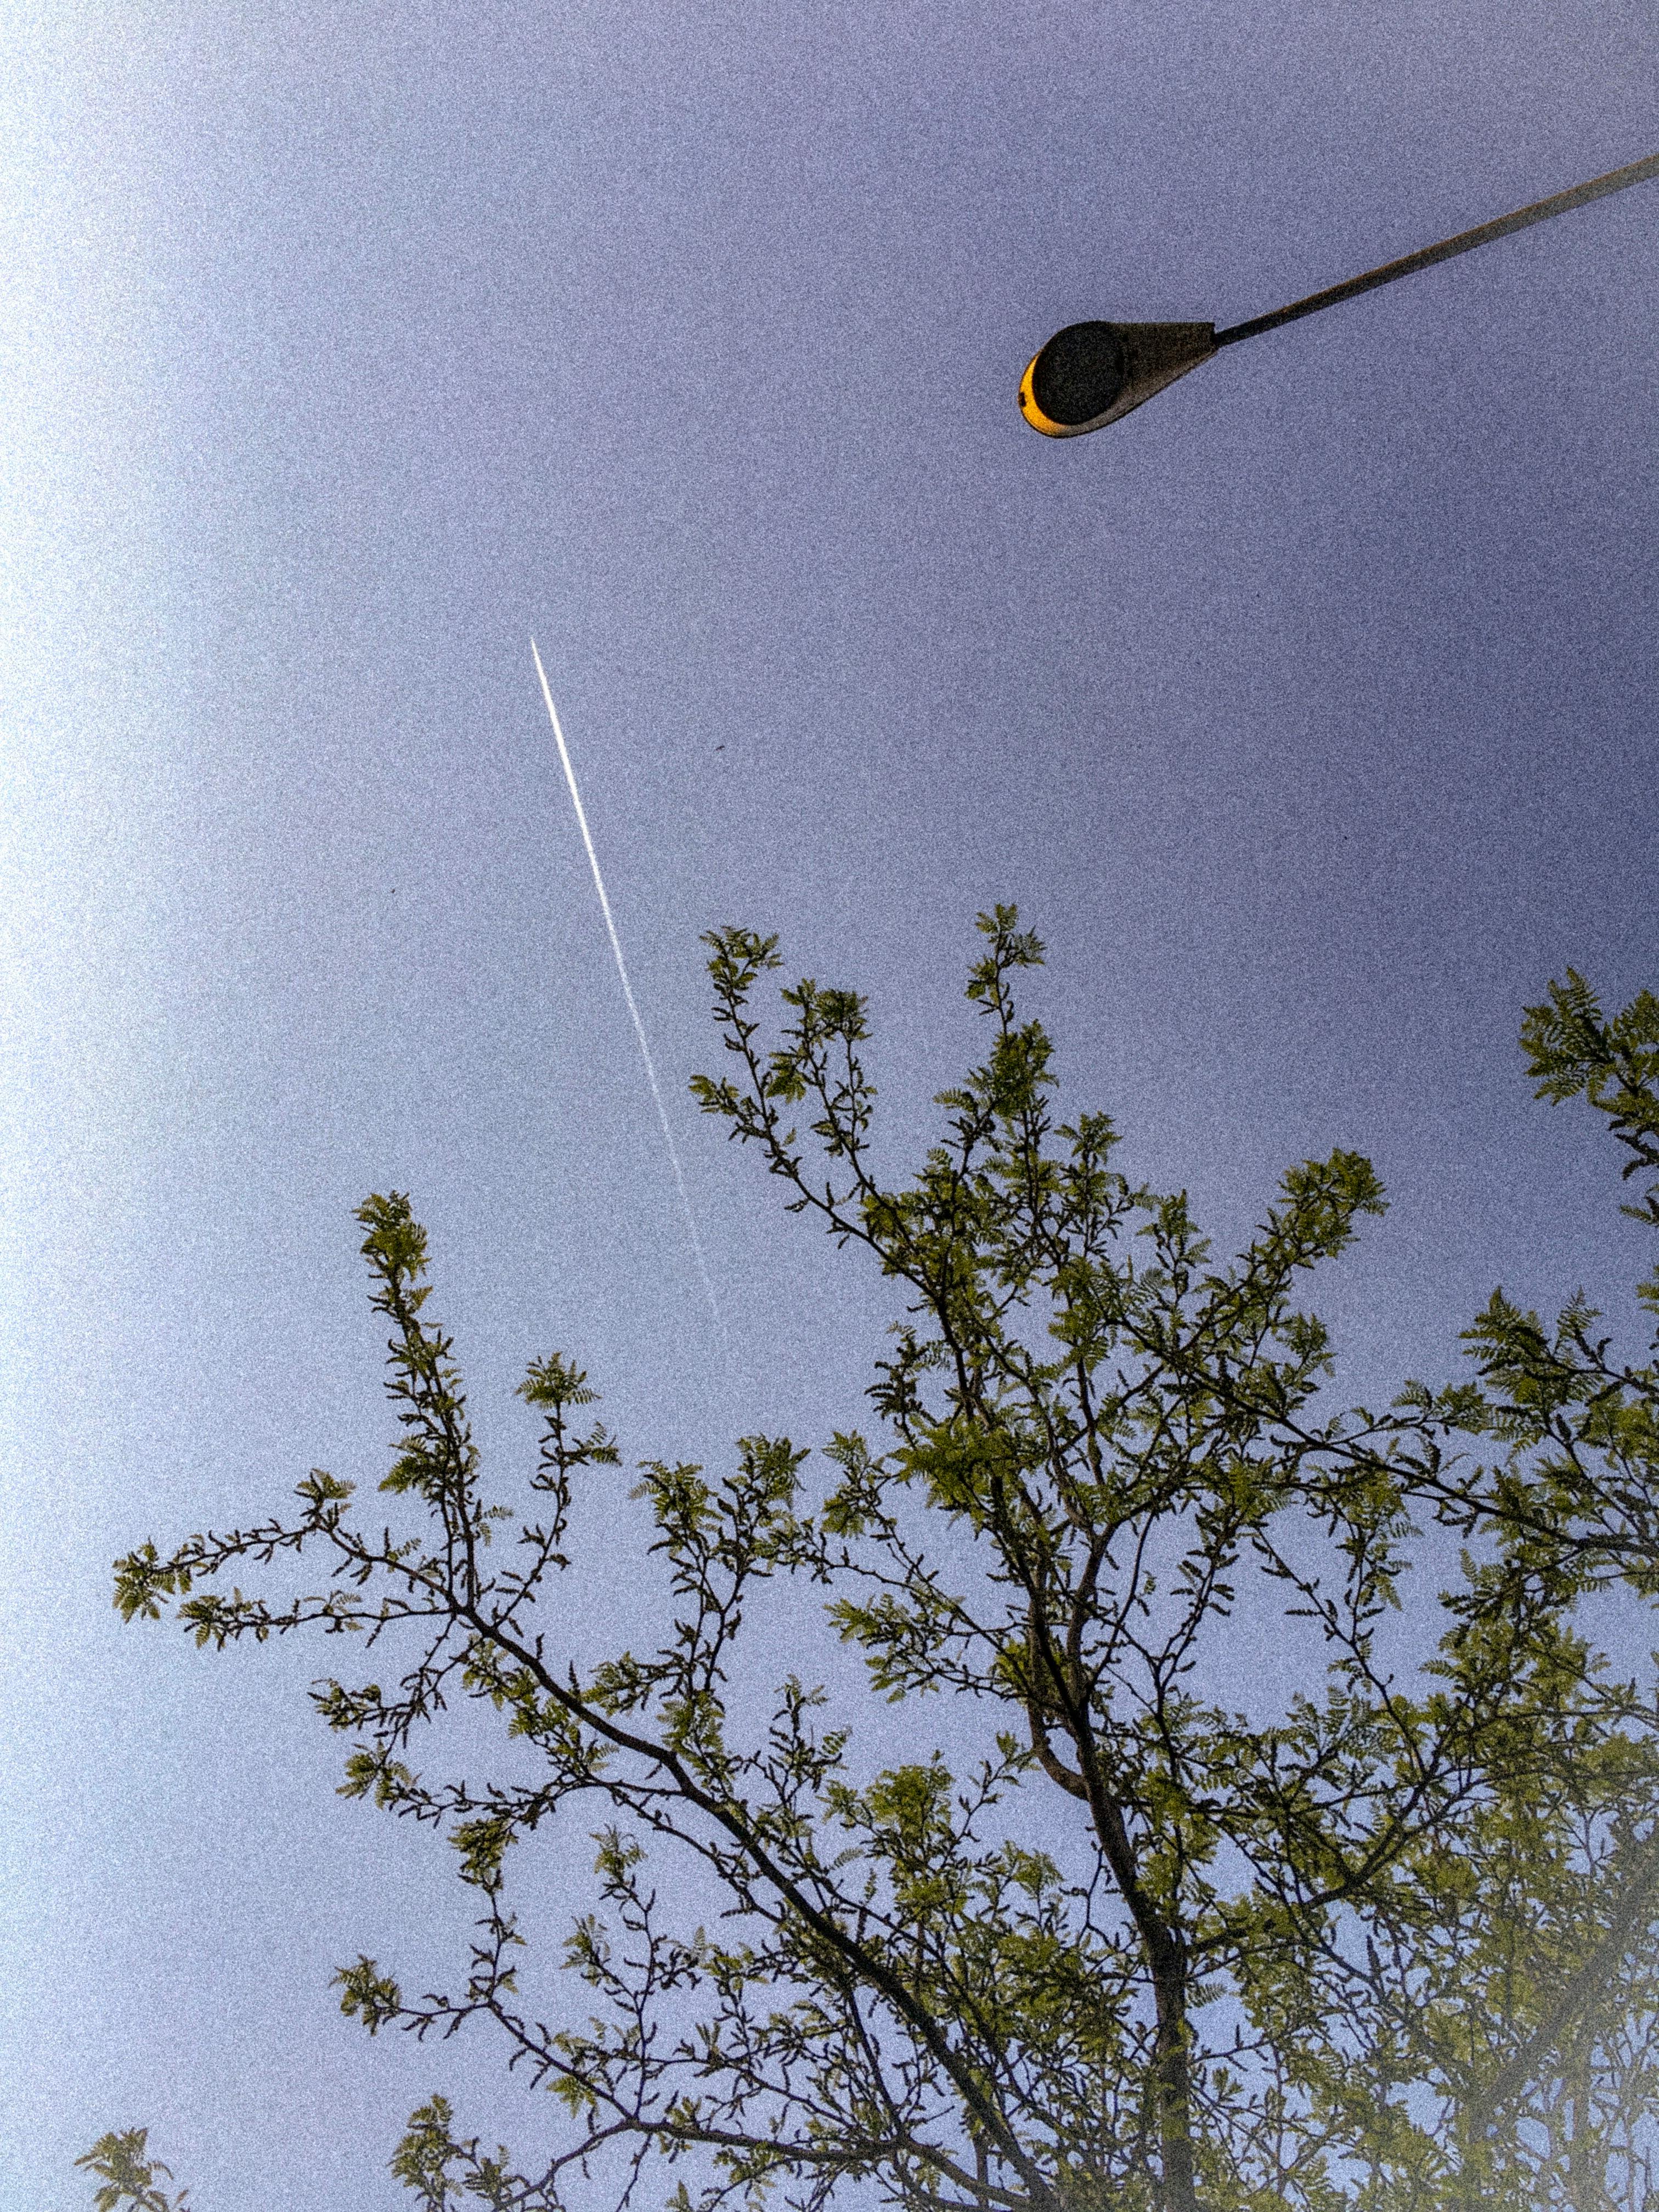 Free stock photo of #sky #airplane #nature #tree #film #, #sunset #sunrise #skyblue #vintage #city